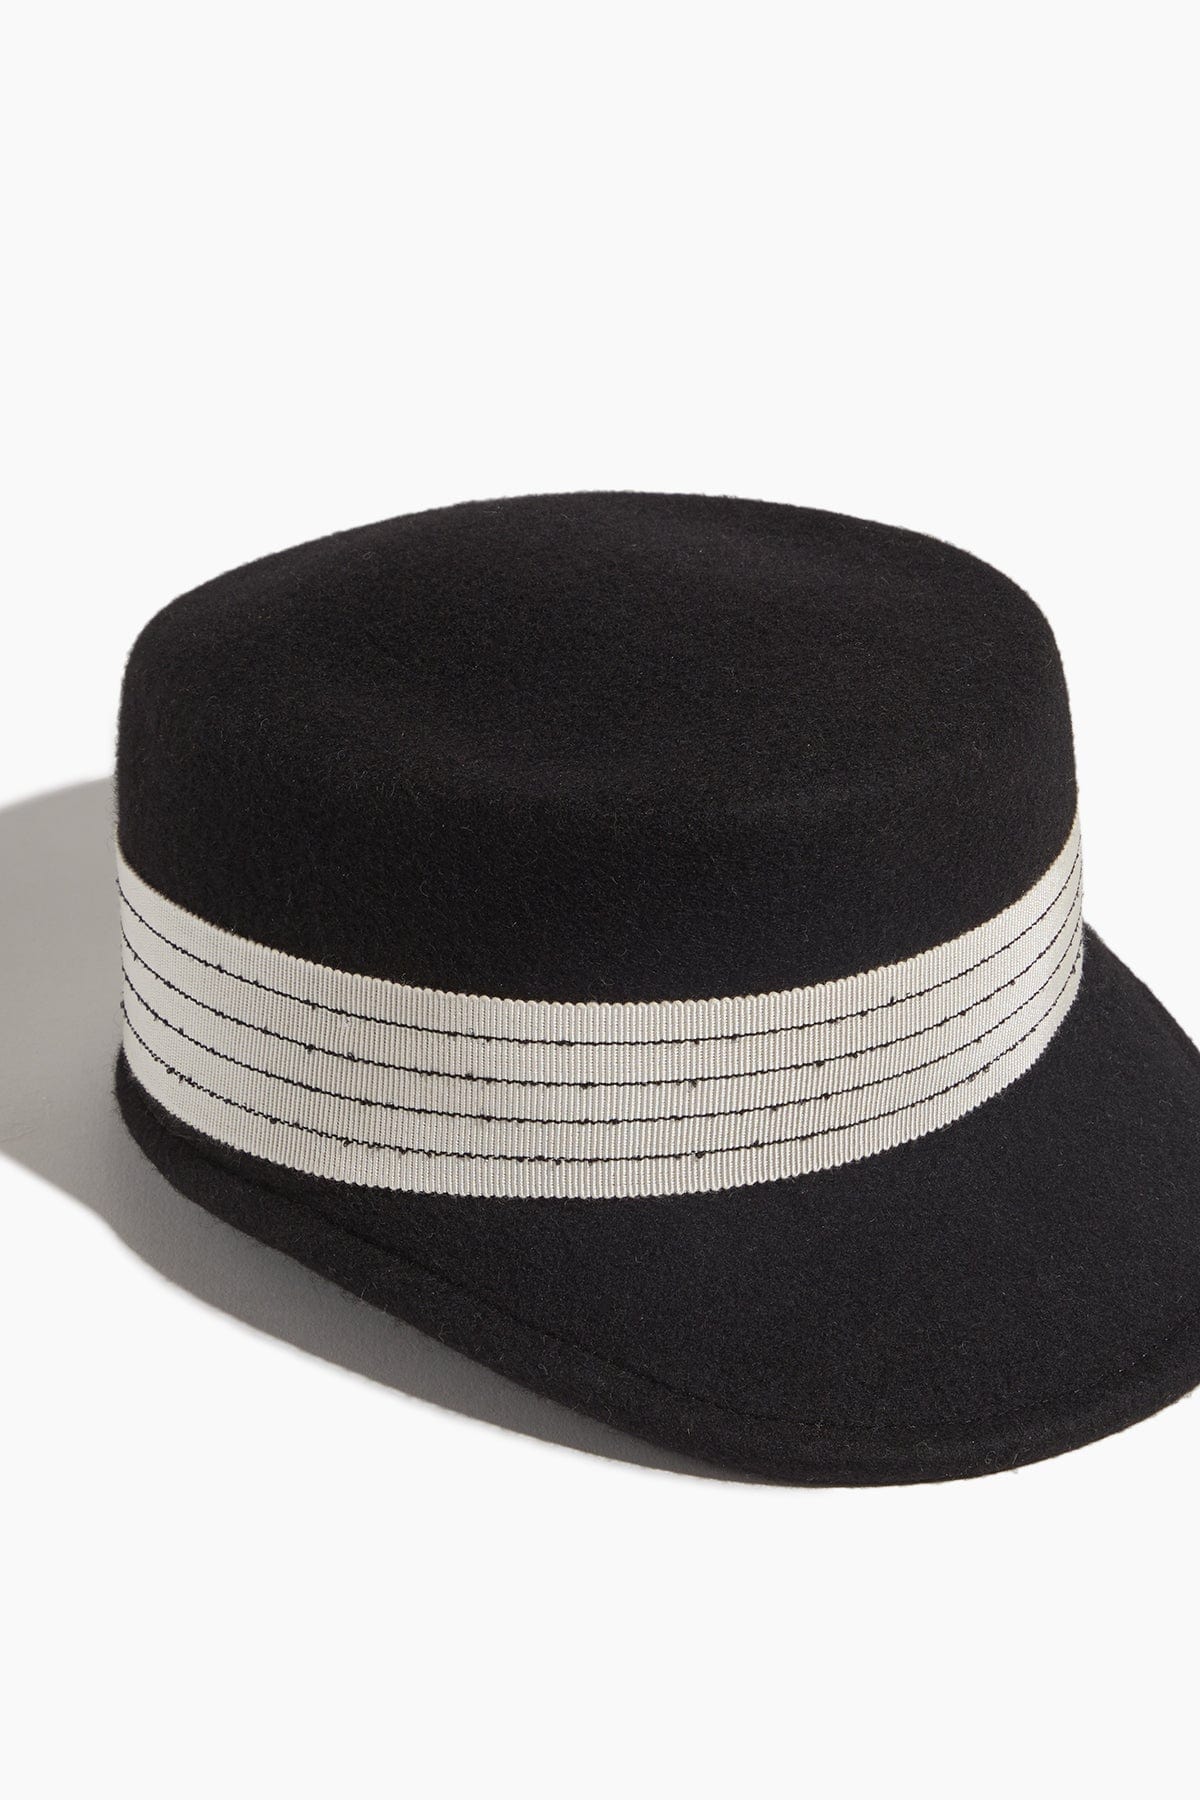 Gigi Burris Hats Ryan Hat in Black Gigi Burris Ryan Hat in Black